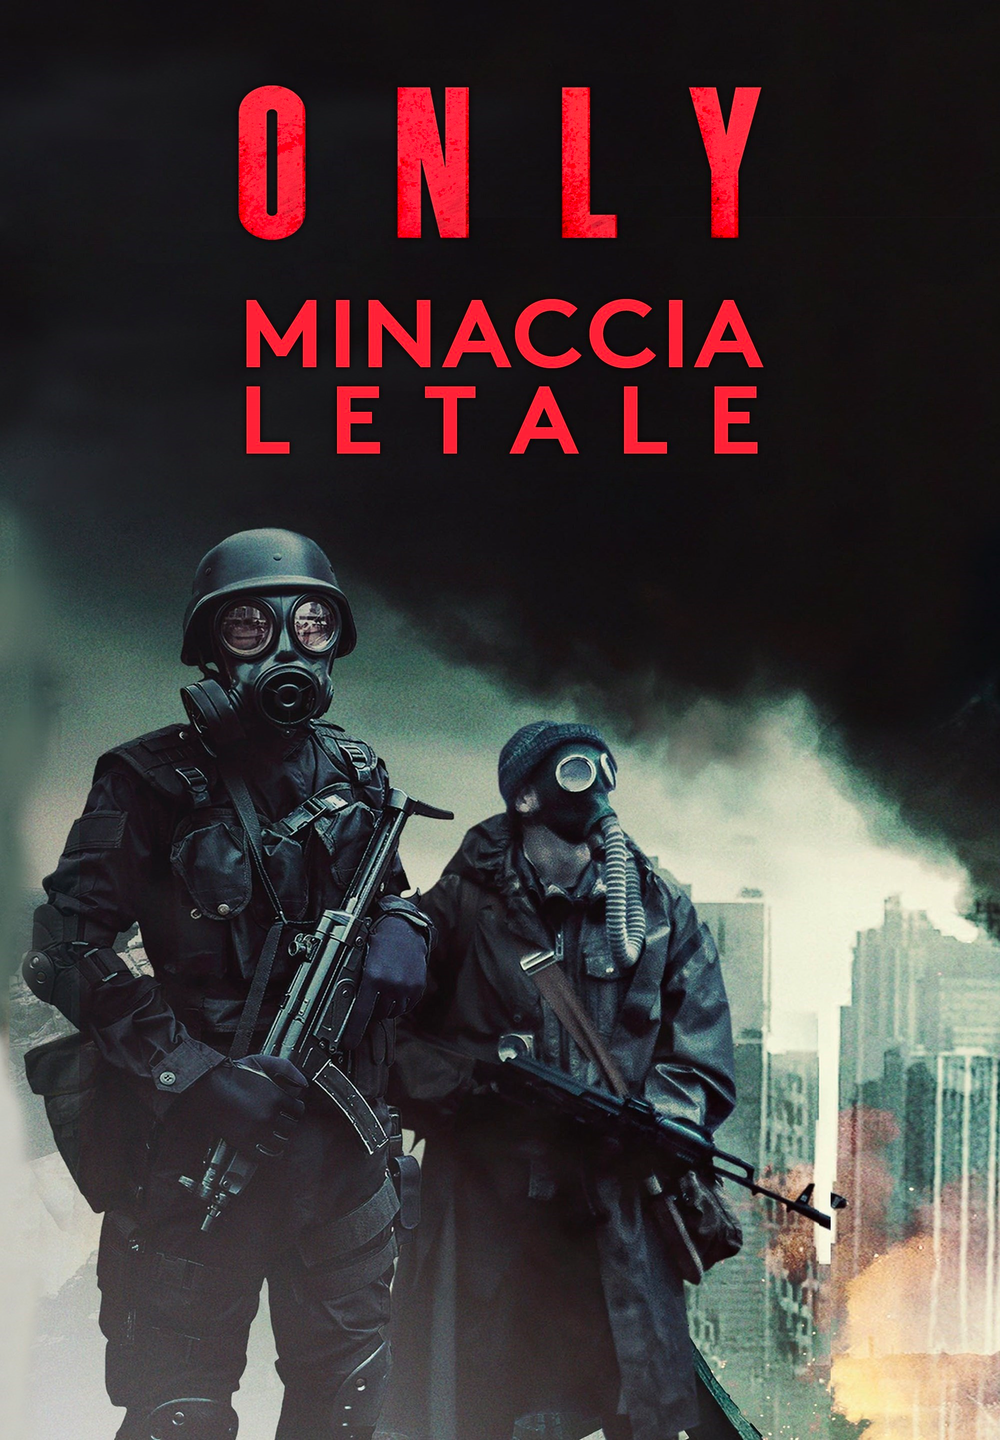 Only – Minaccia letale [HD] (2019)